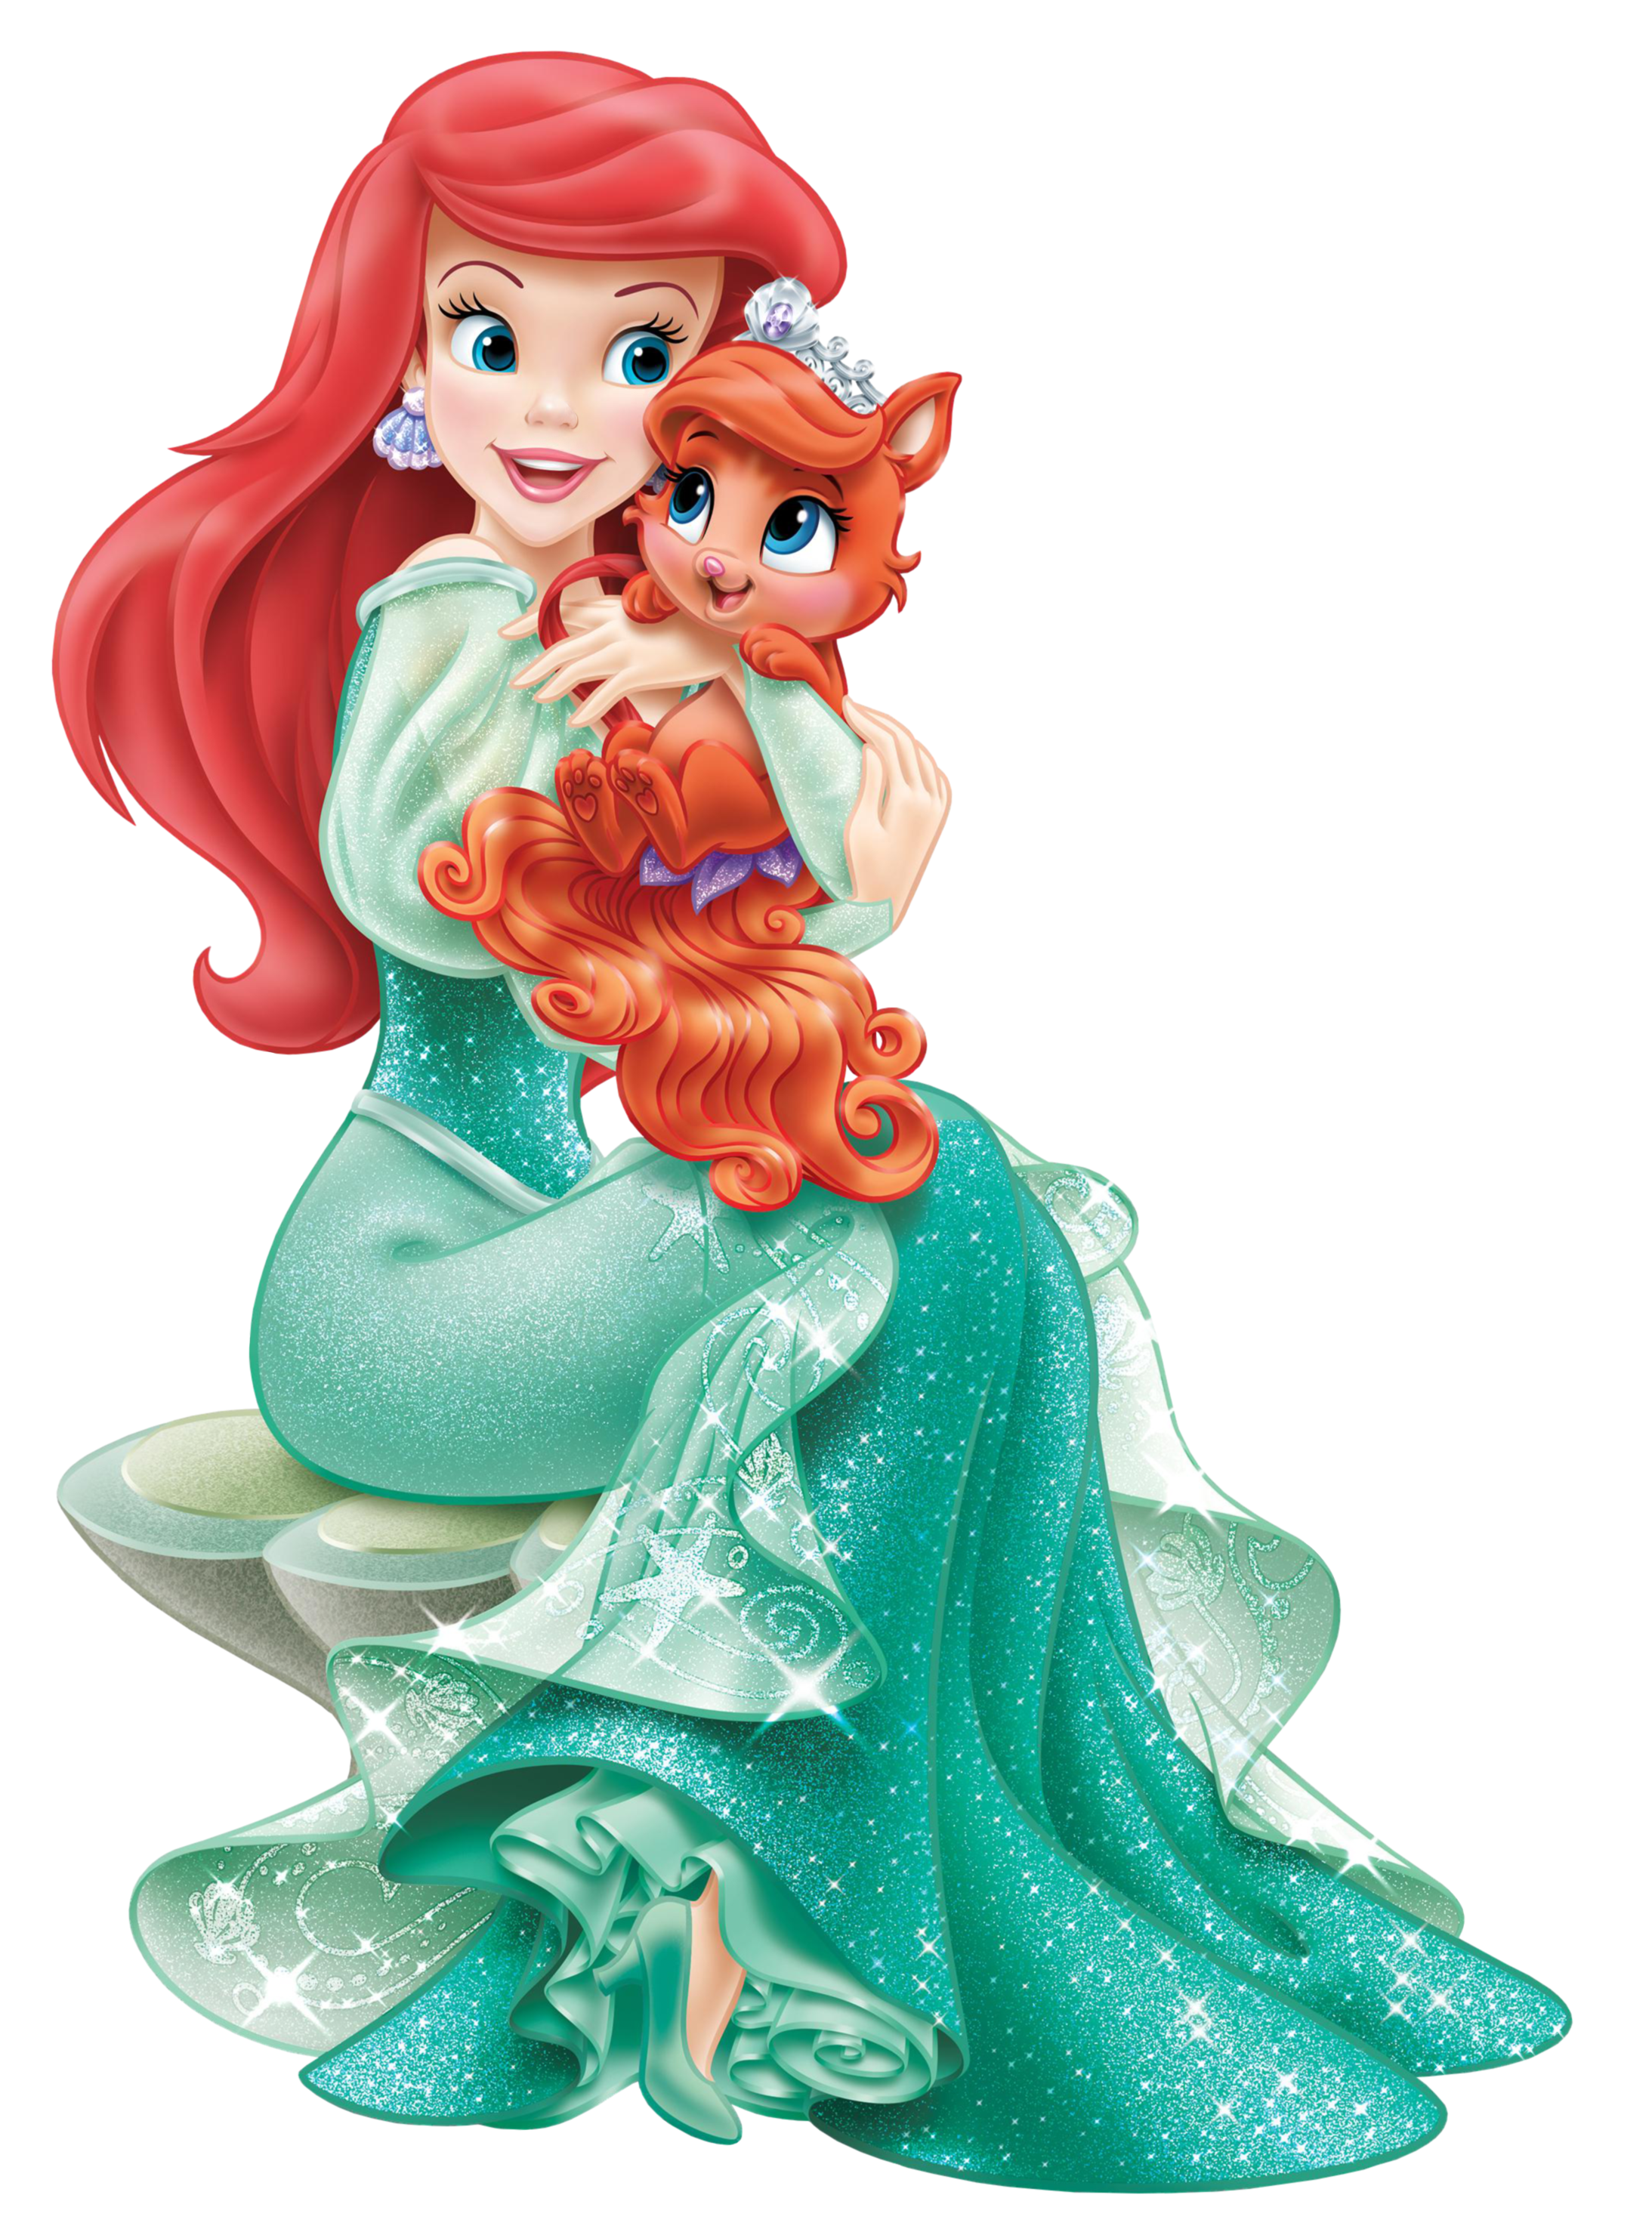 Disney Princess Ariel with Cute Kitten Transparent PNG Clip Art.